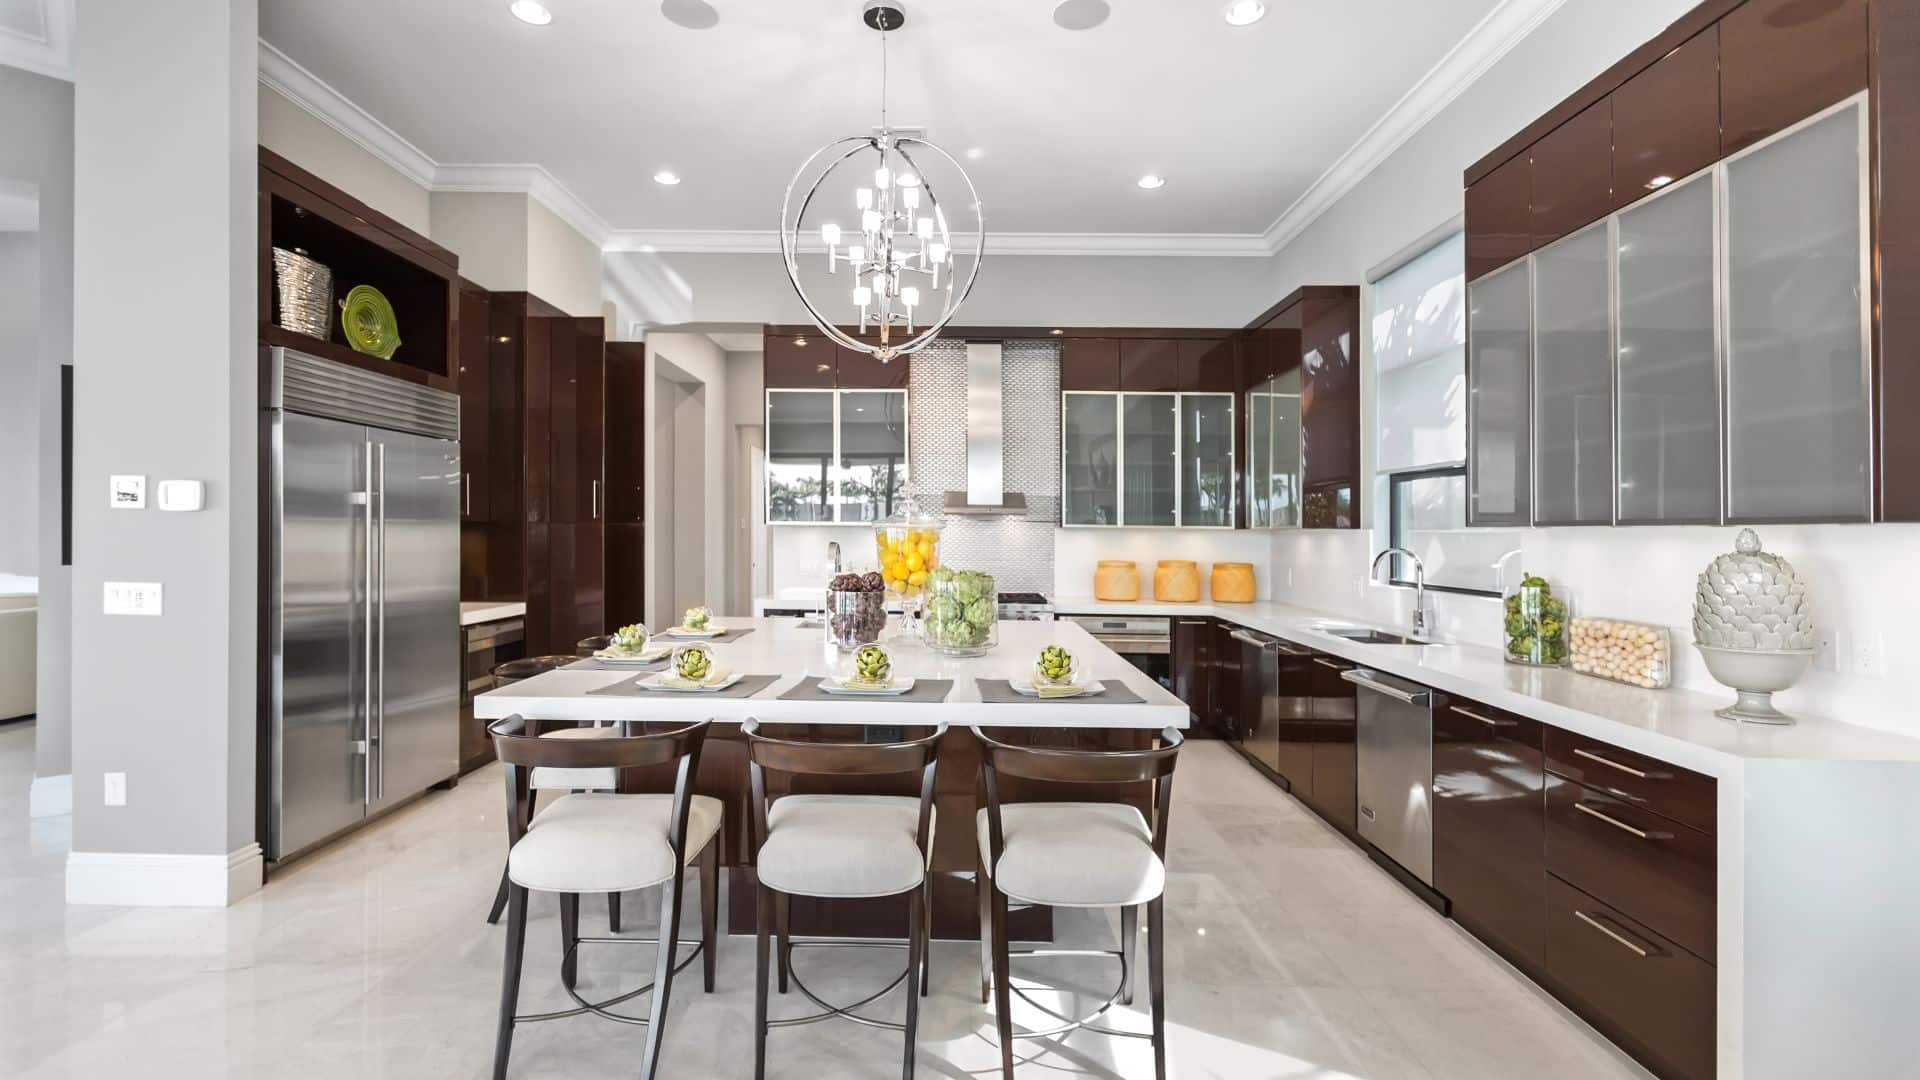 Platinum deal luxurious brown kitchen with white quartz countertop